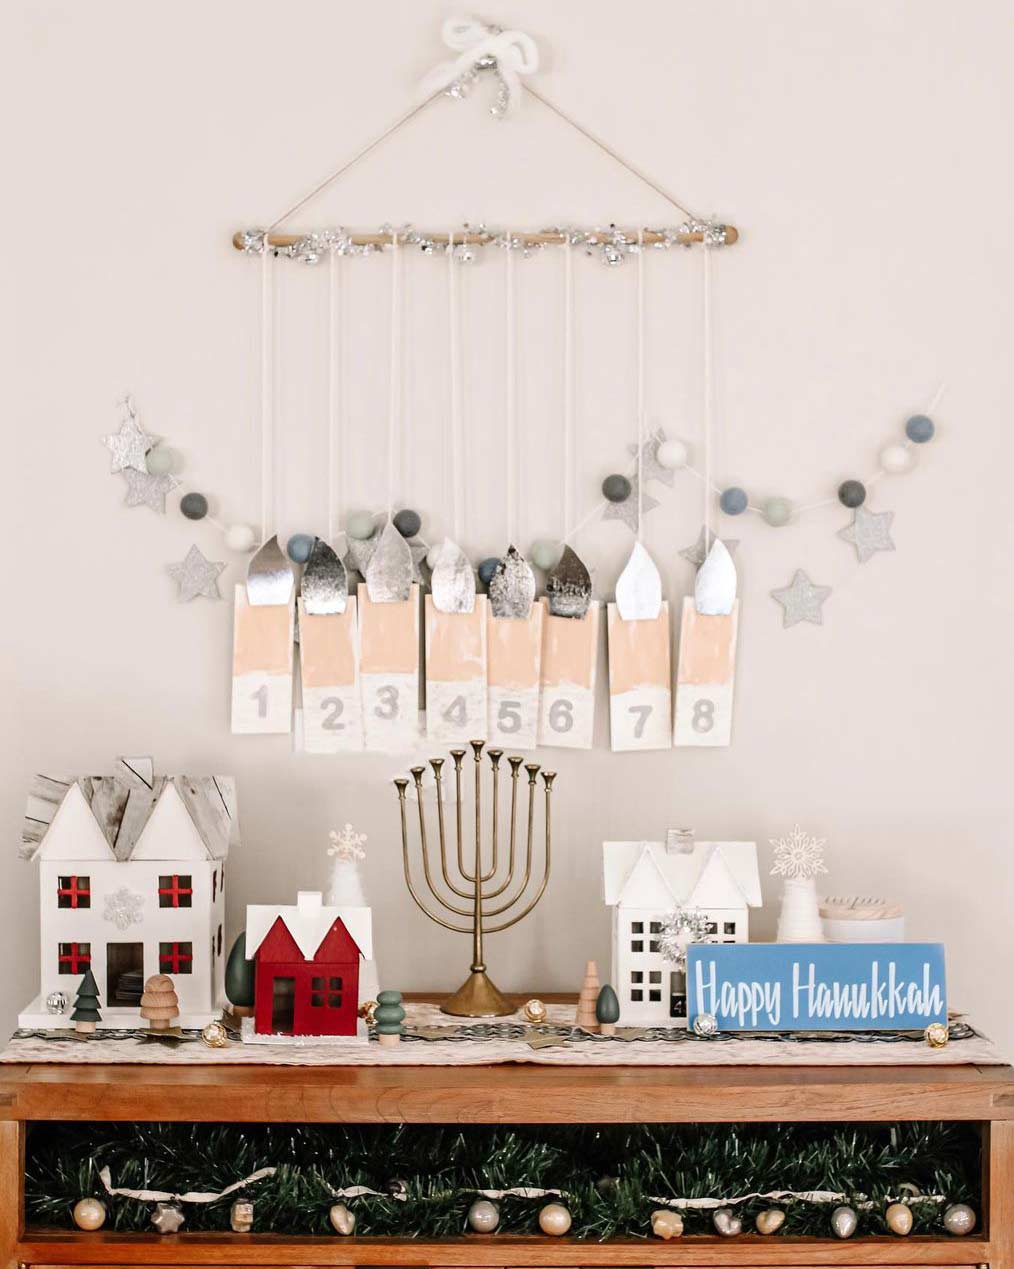 A wall-mounted calendar designed to look like a menorah. 